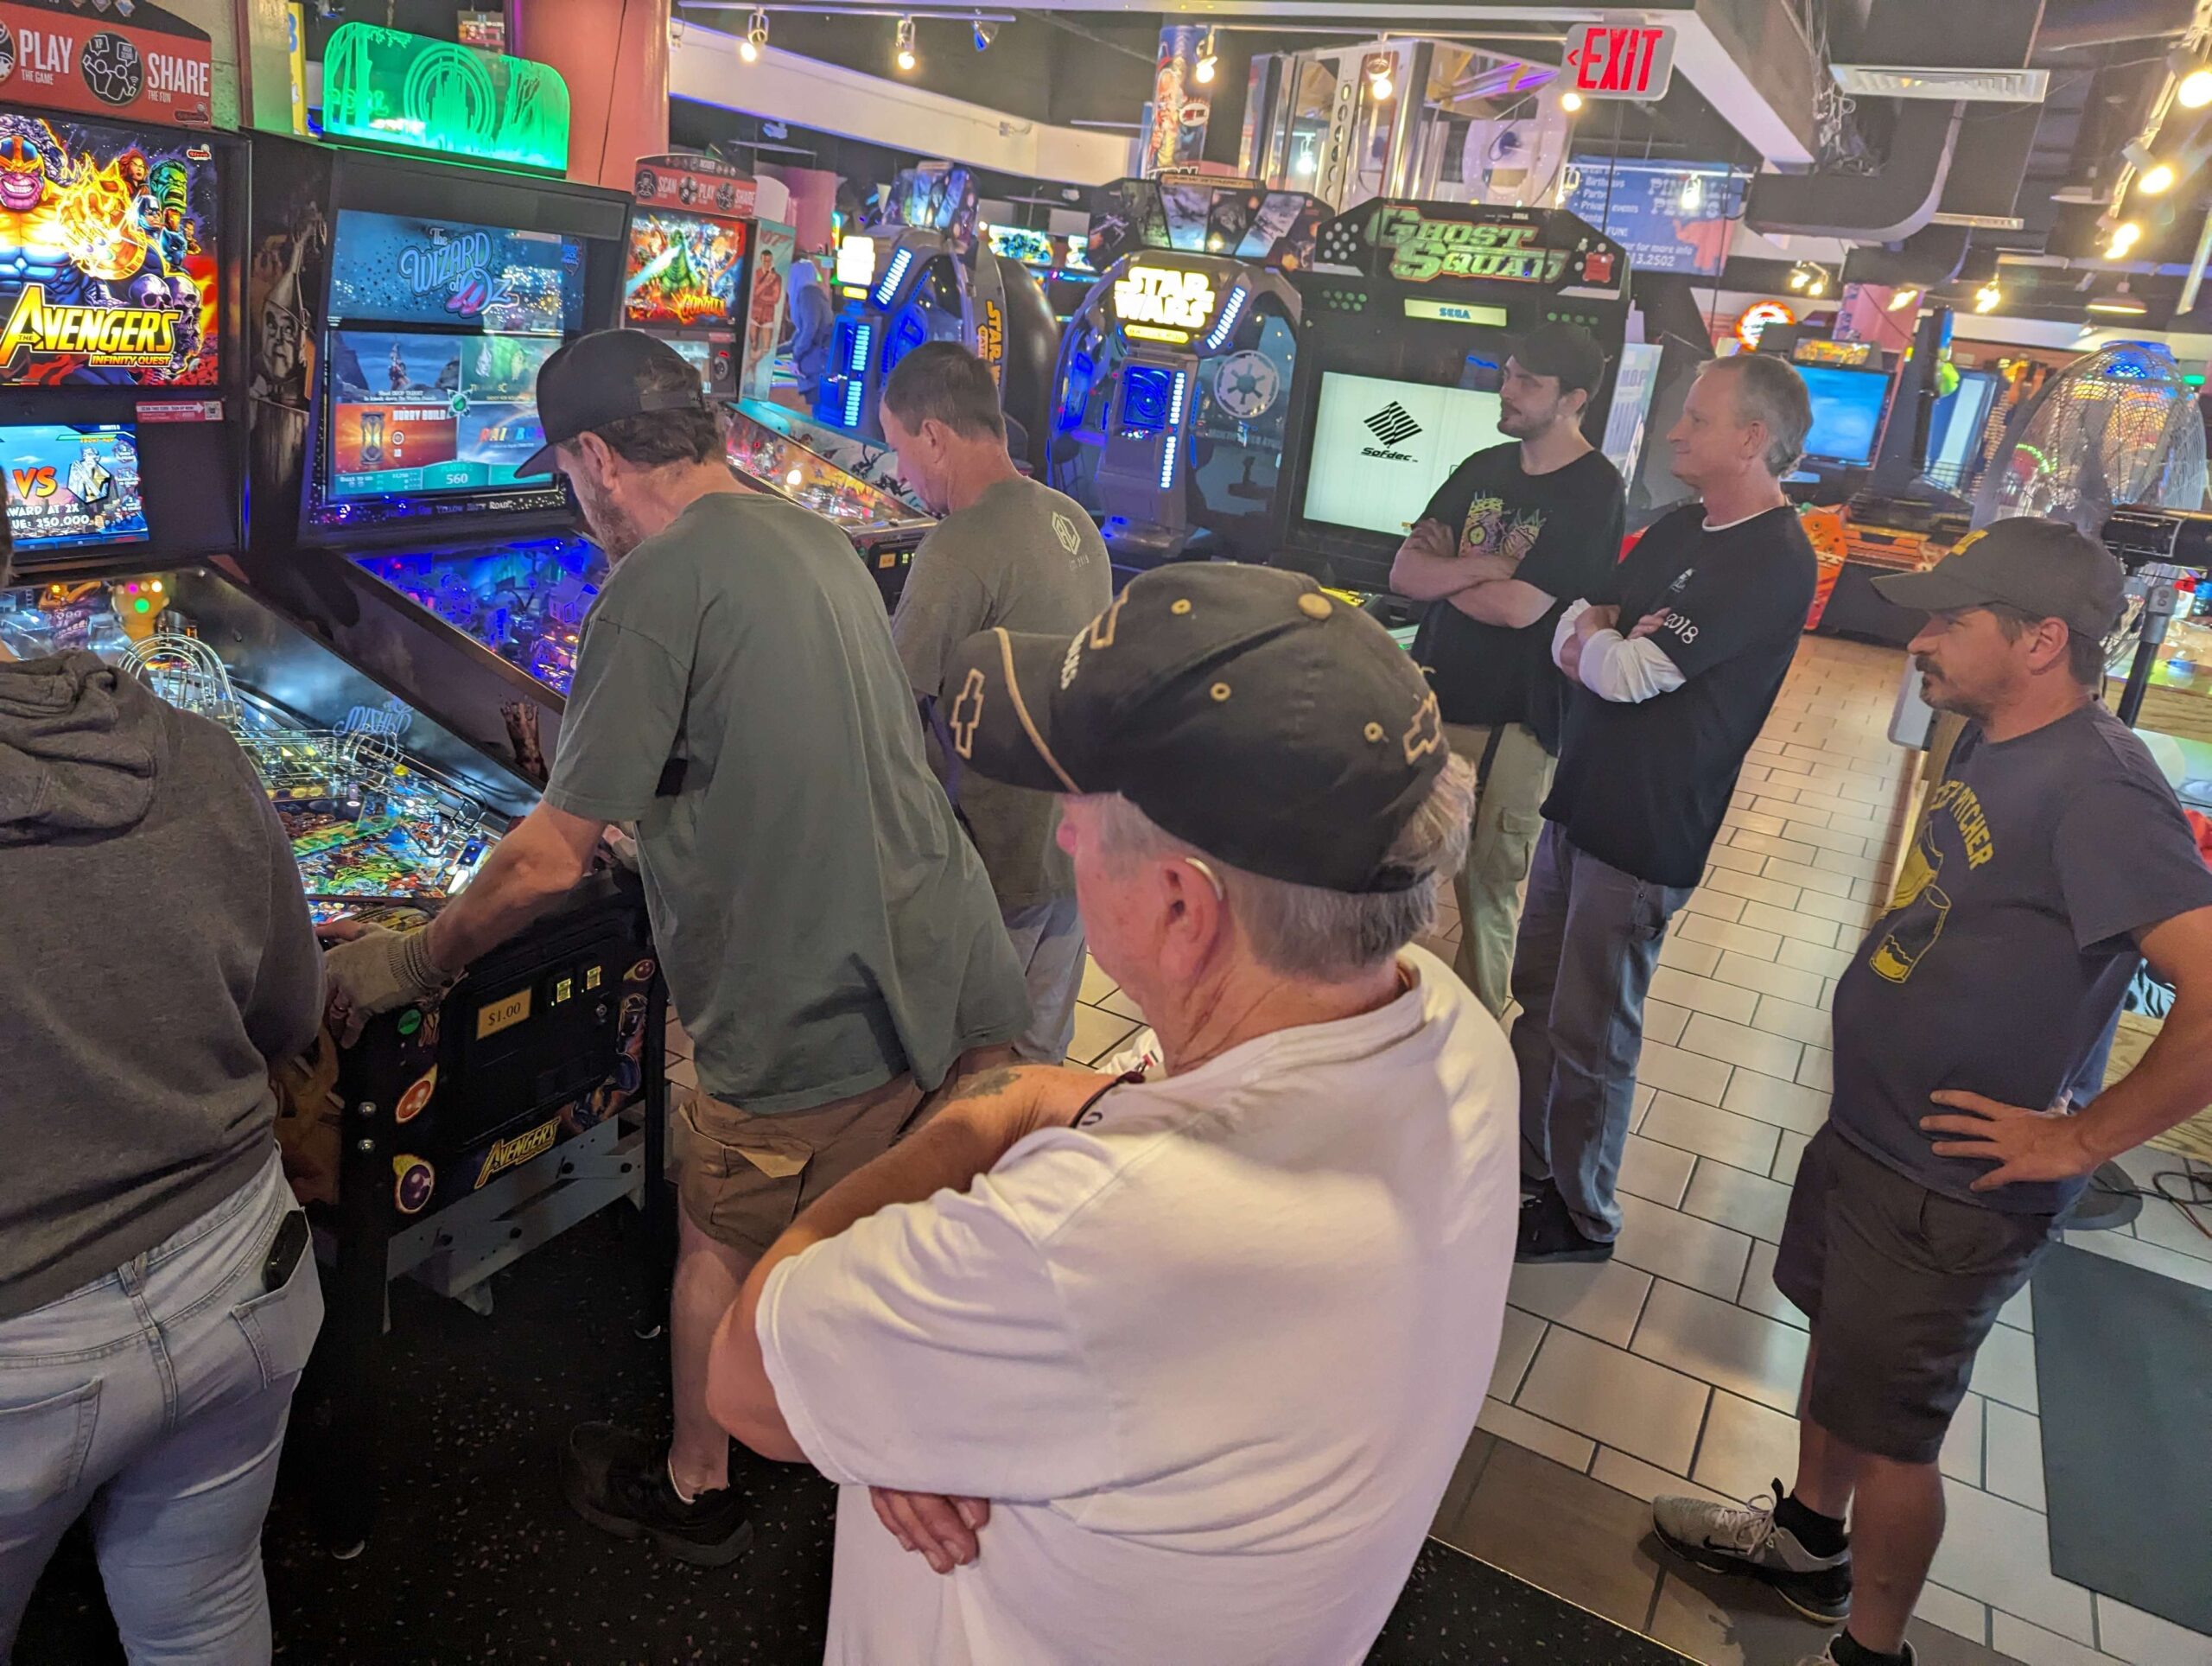 A tournament at Pinball Pete's